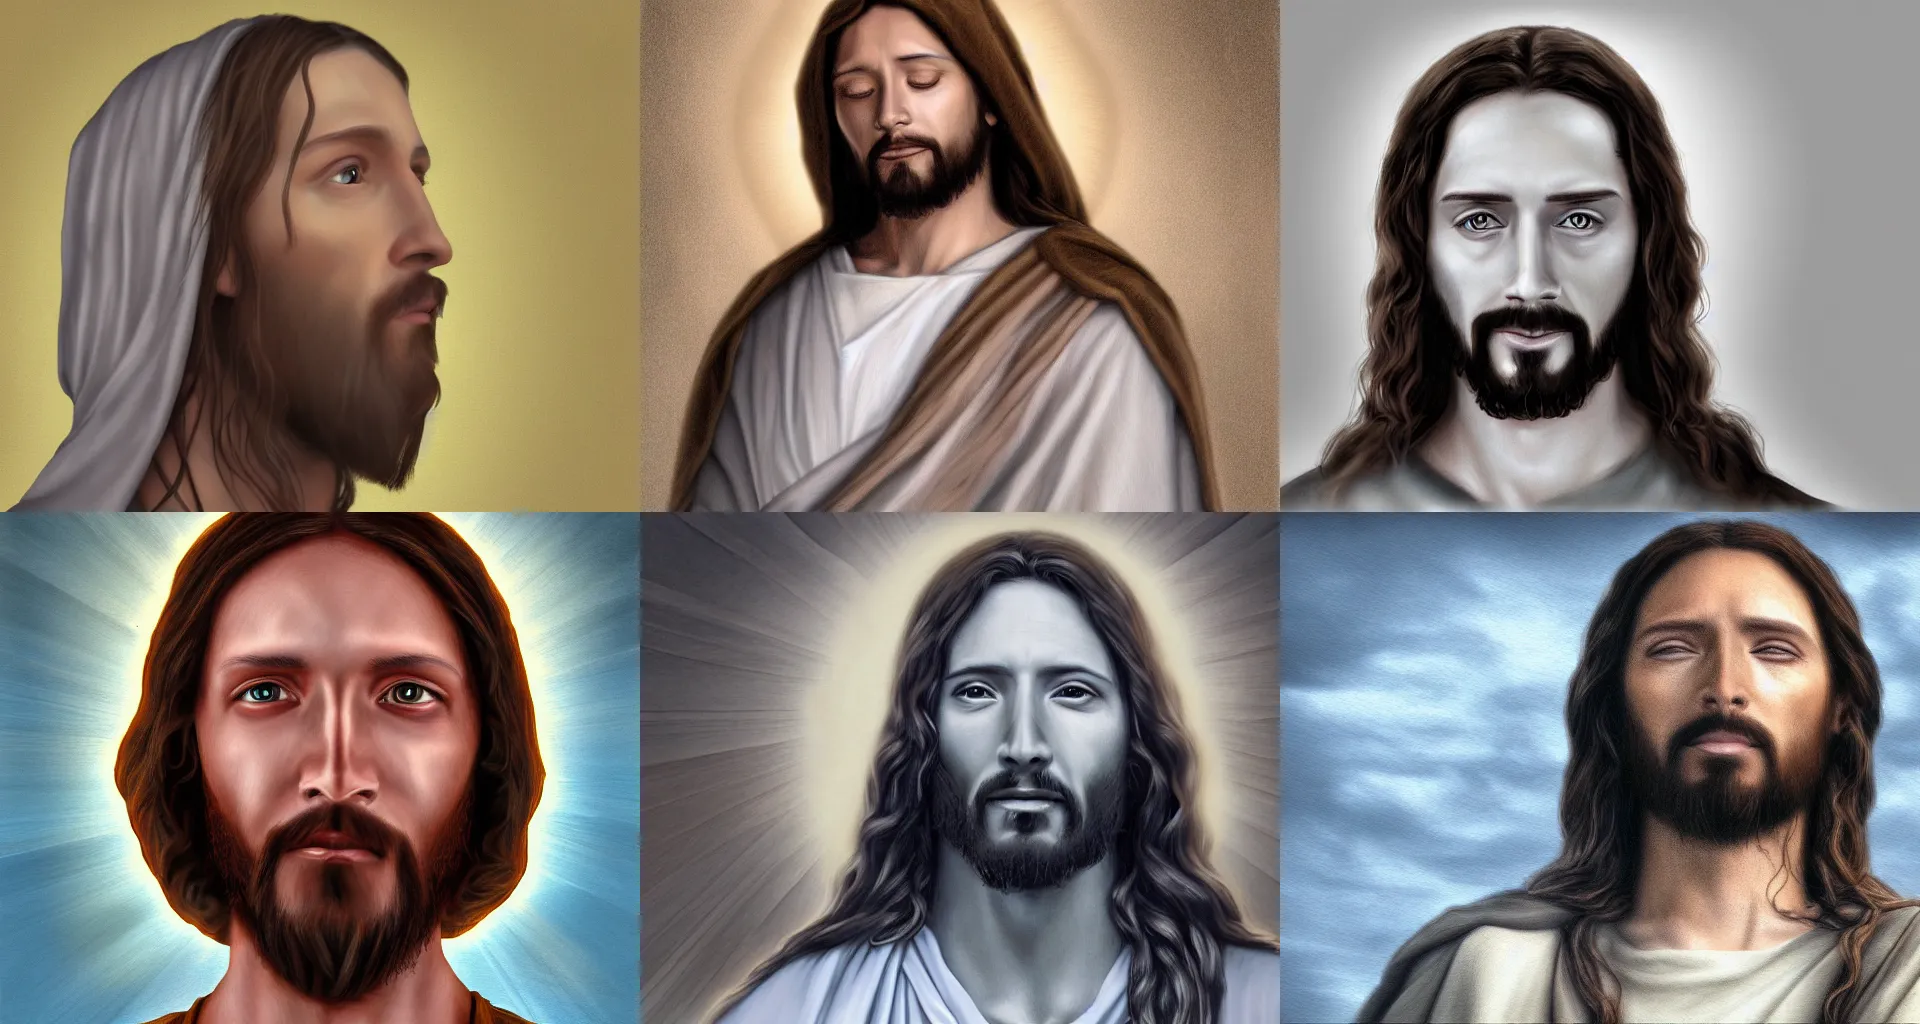 Prompt: photorealistic jesus christ, digital art